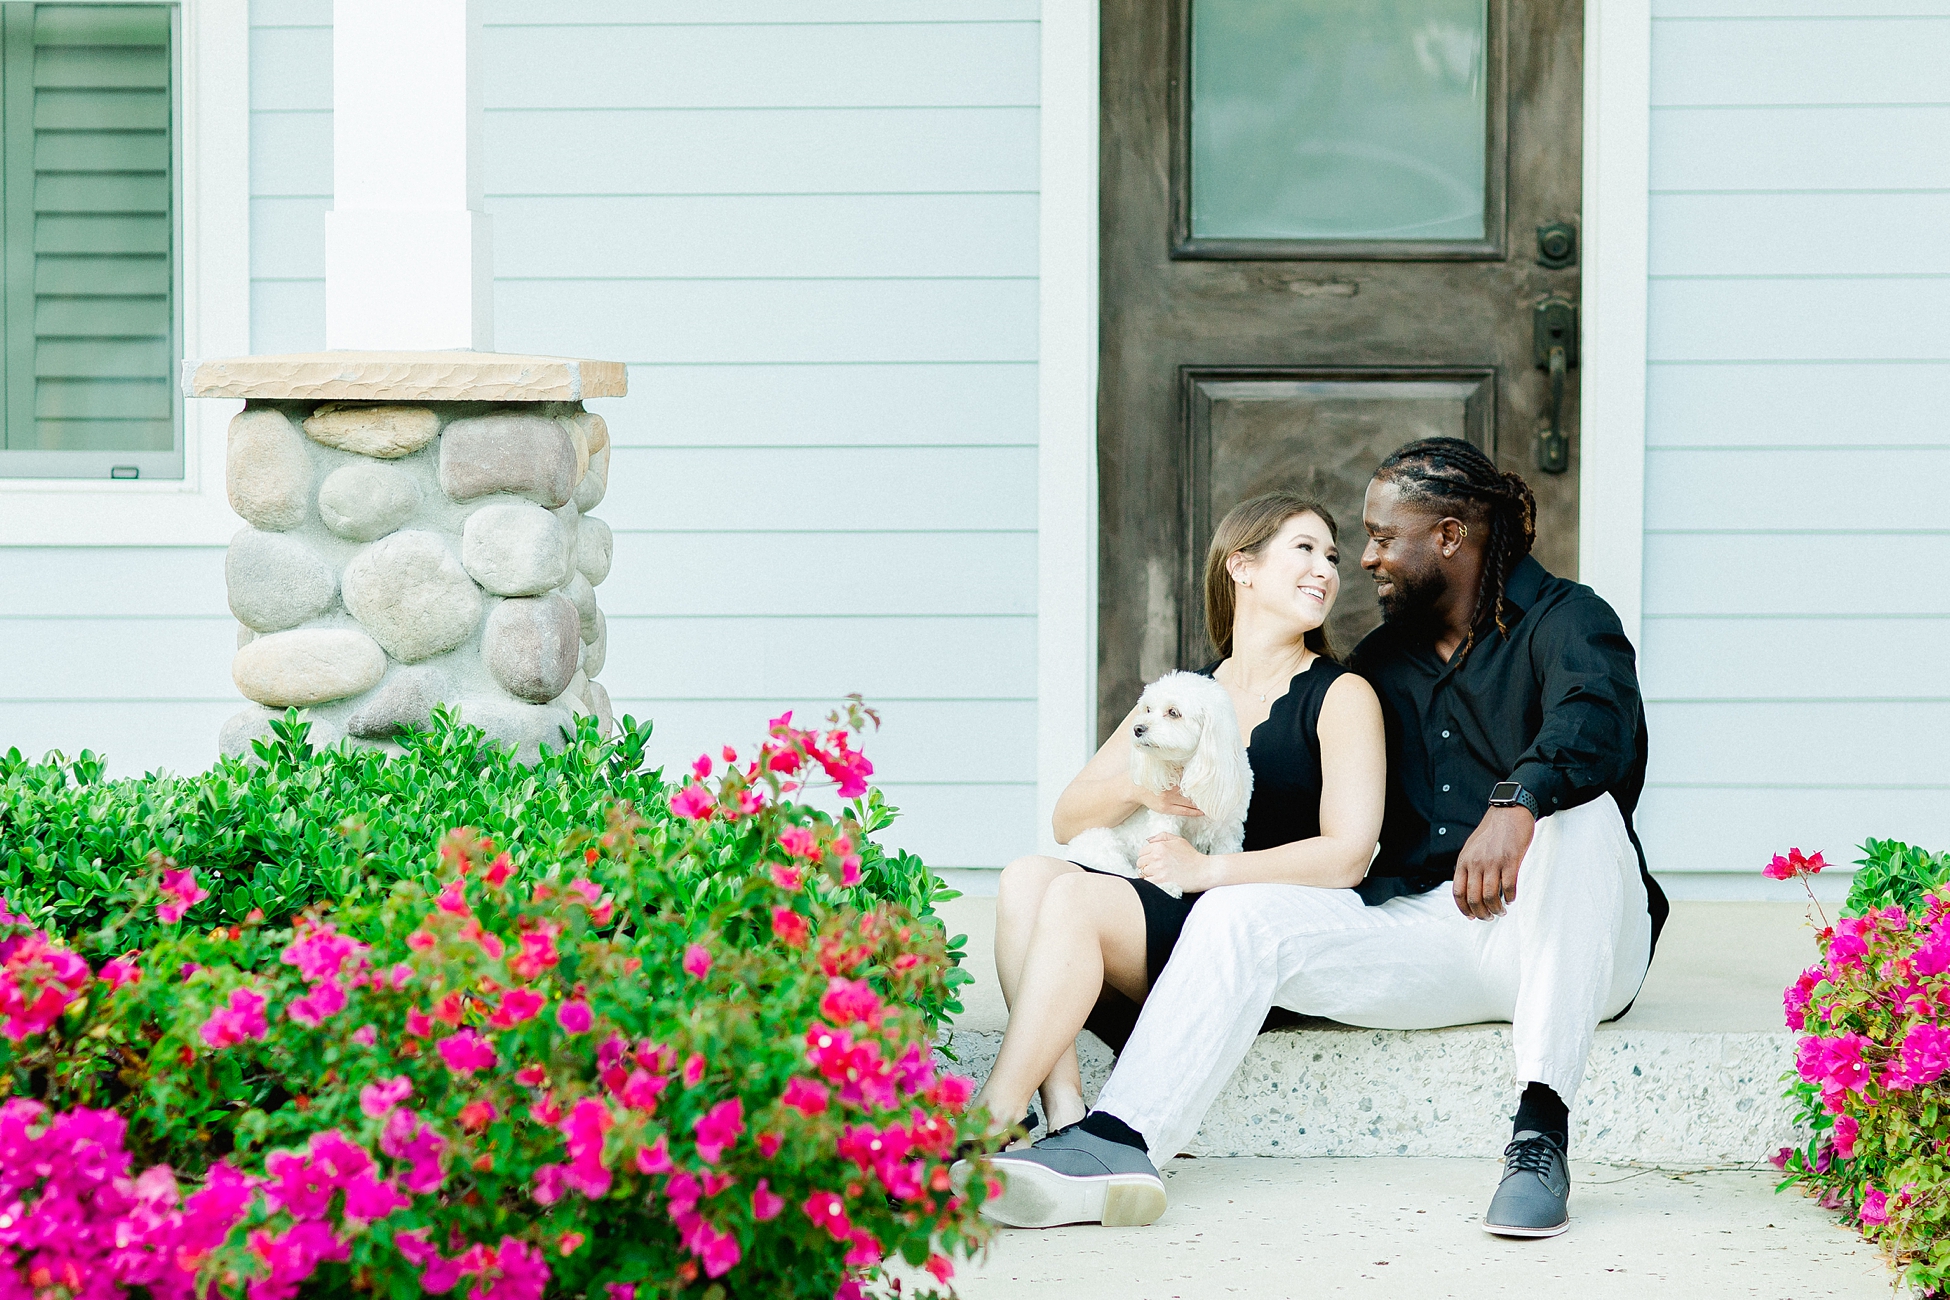 Sarasota Engagement | © Ailyn La Torre Photography 2019